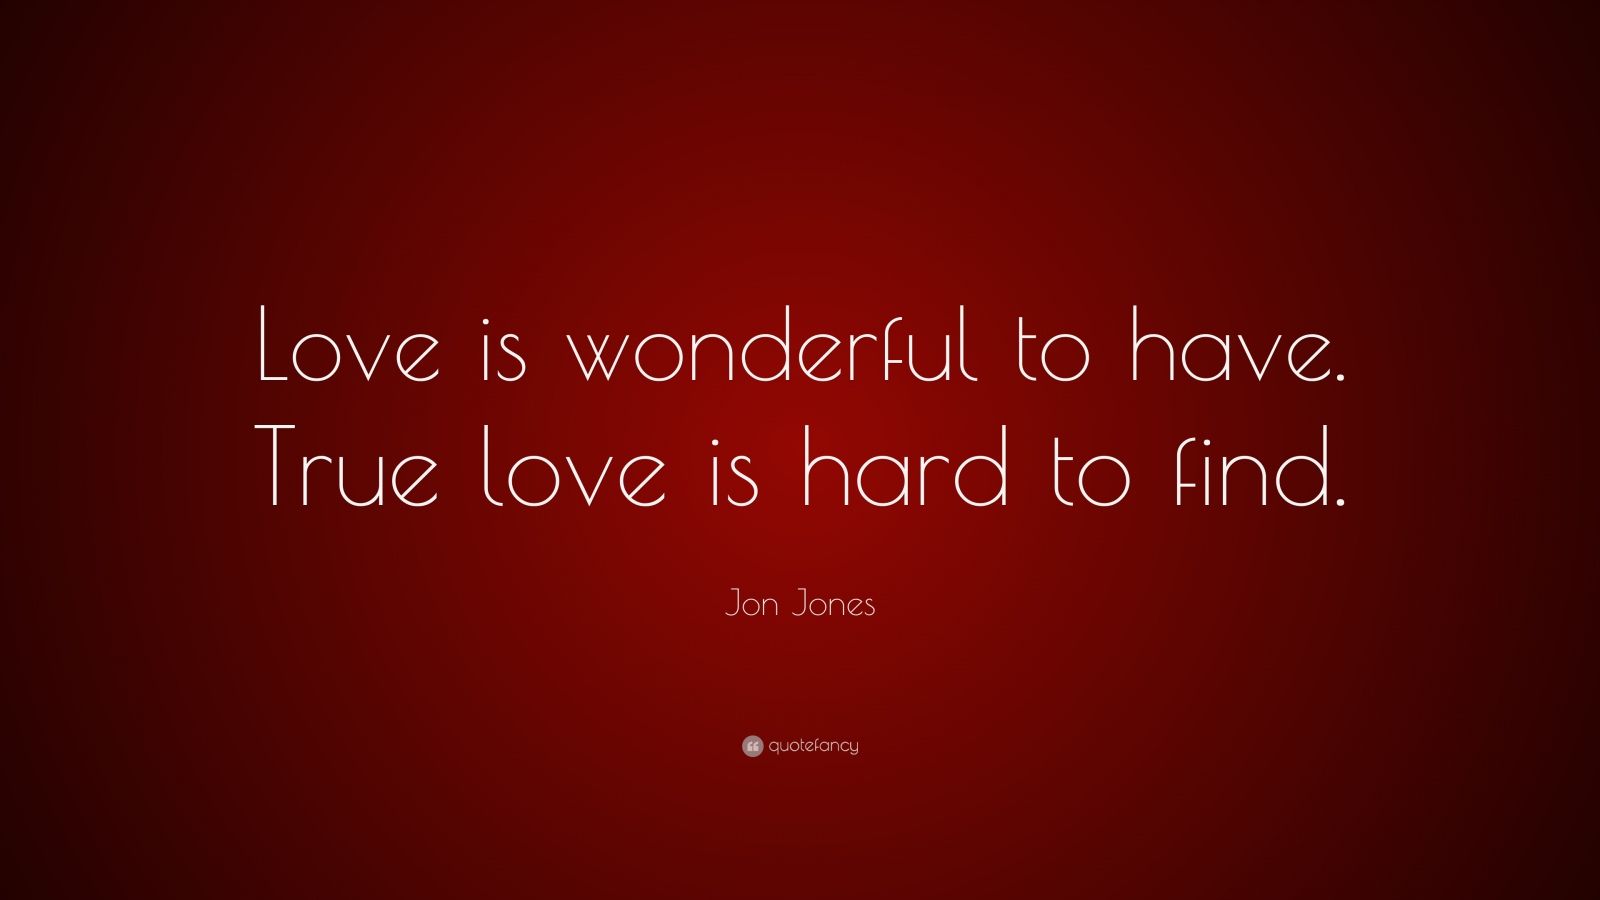 Jon Jones Quote “Love is wonderful to have True love is hard to